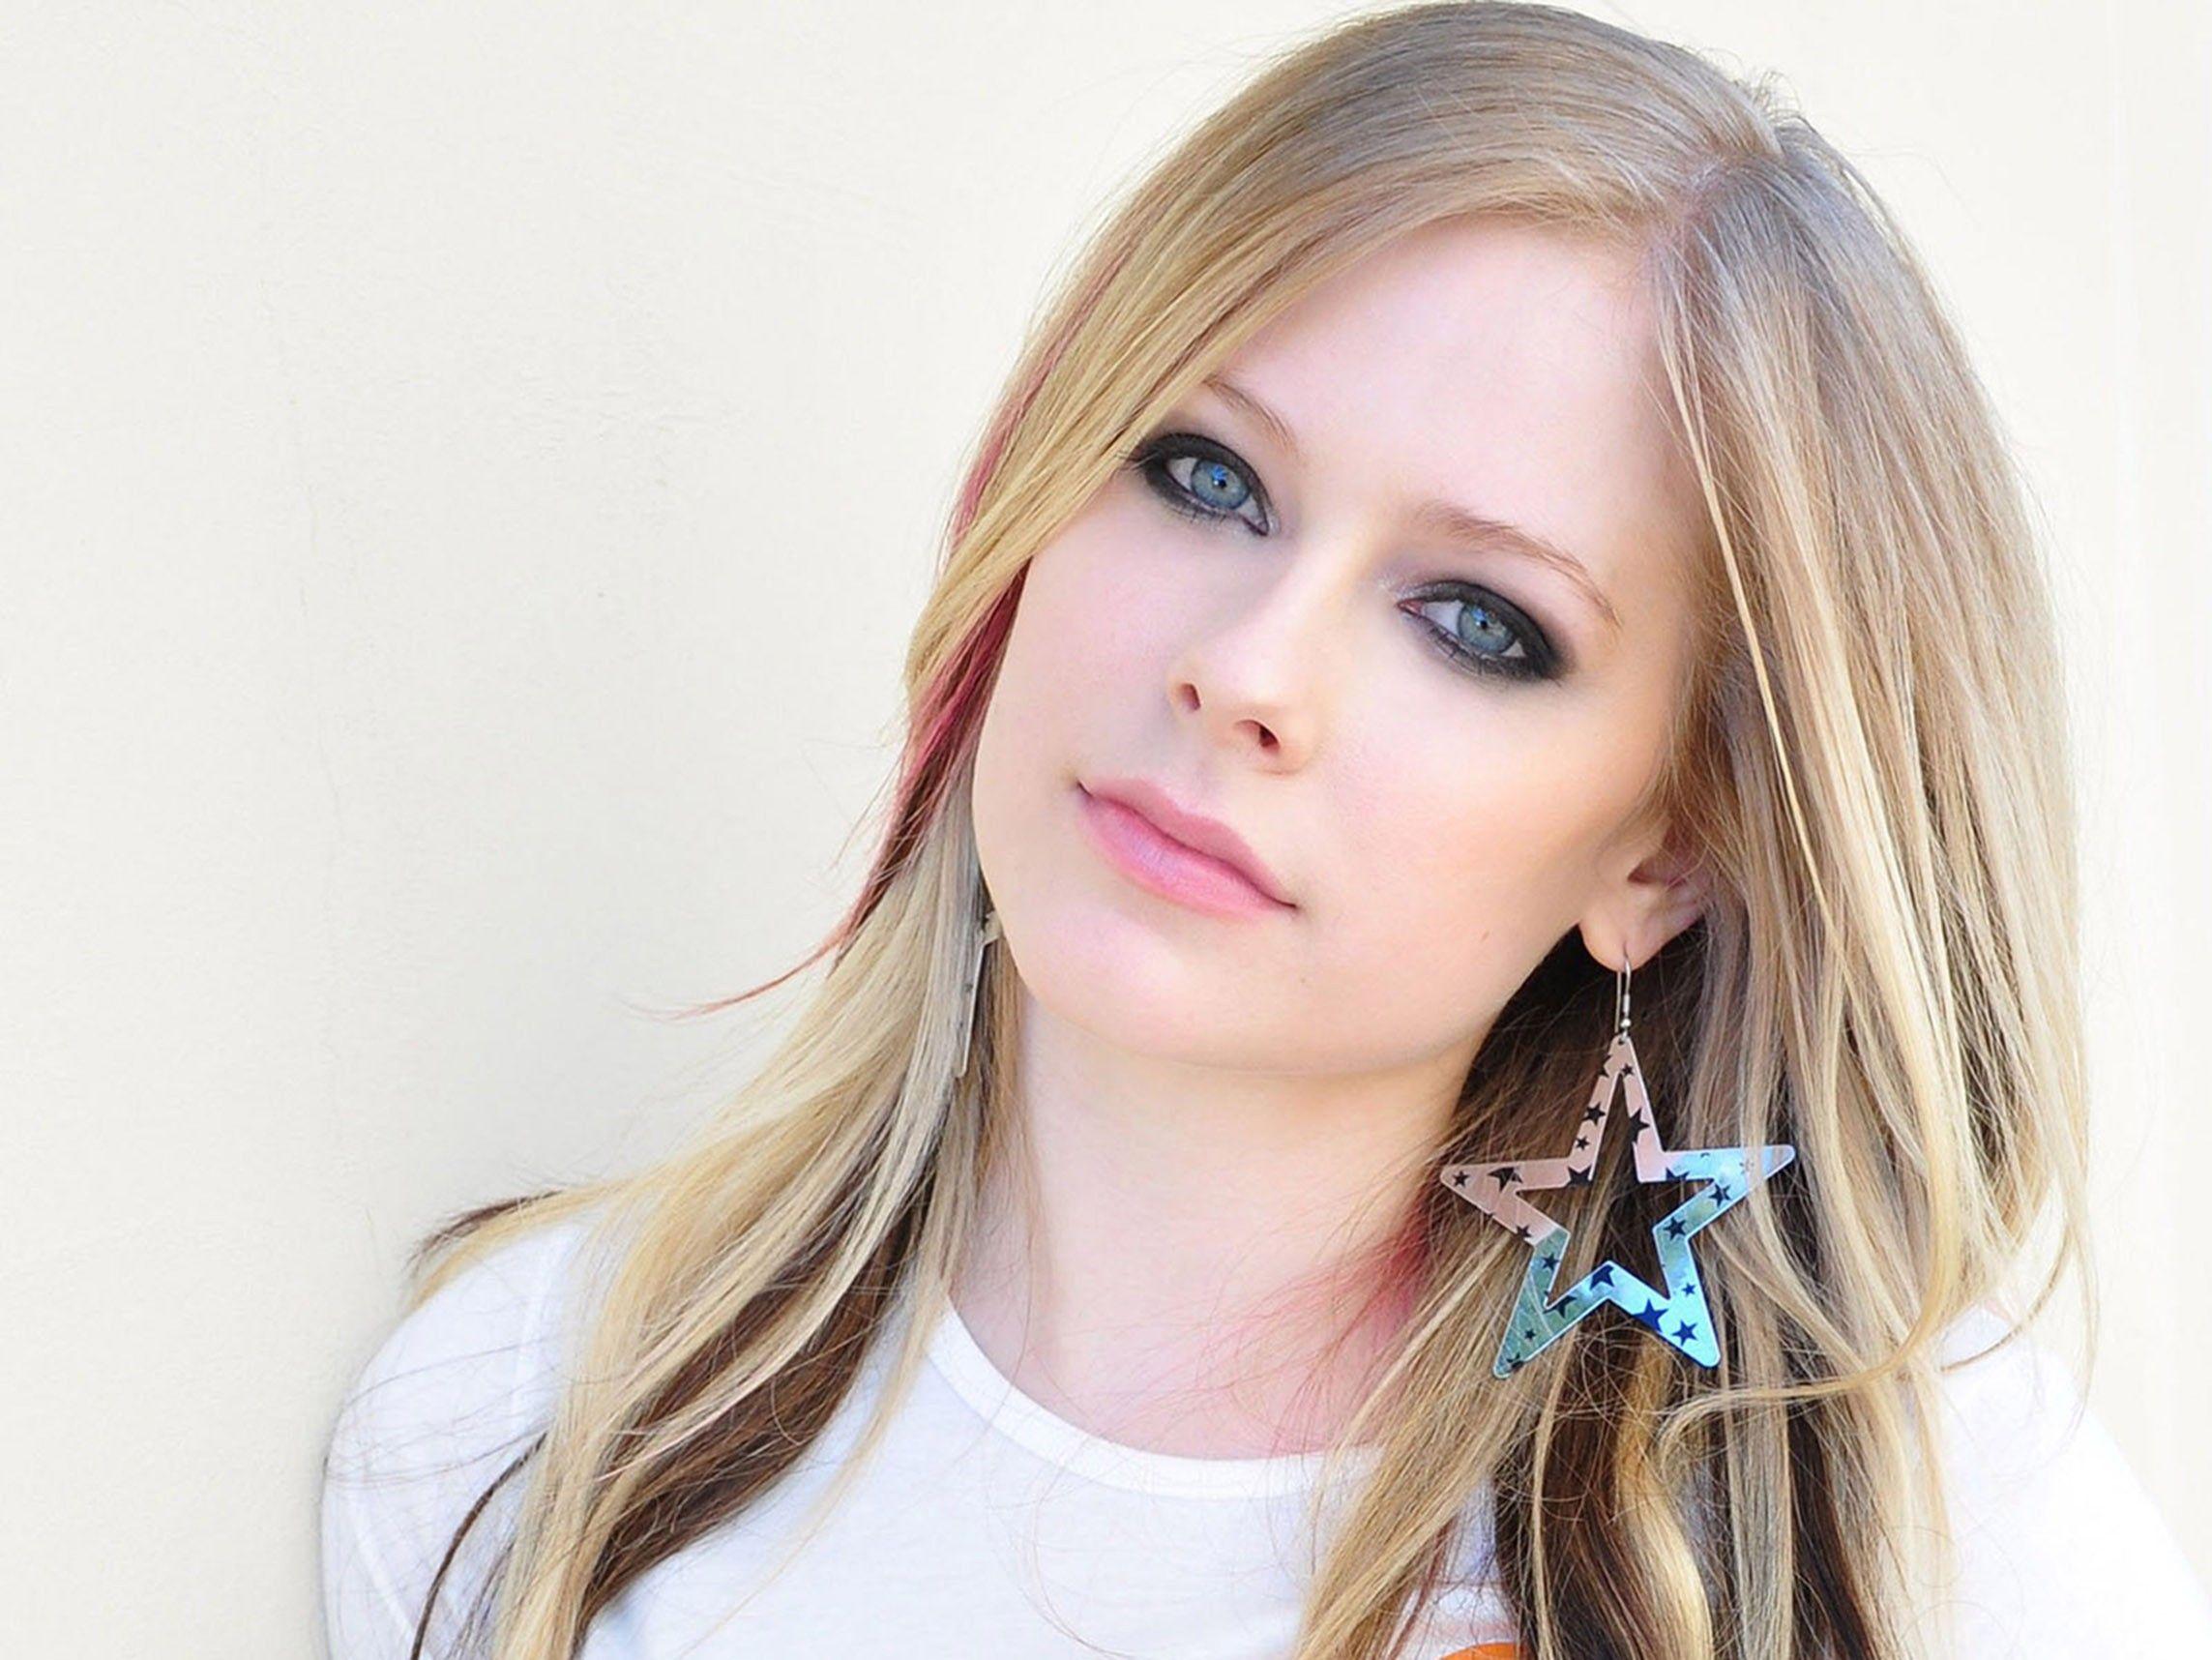 Avril Lavigne image <3 Avril Lavigne <3 HD wallpaper and background